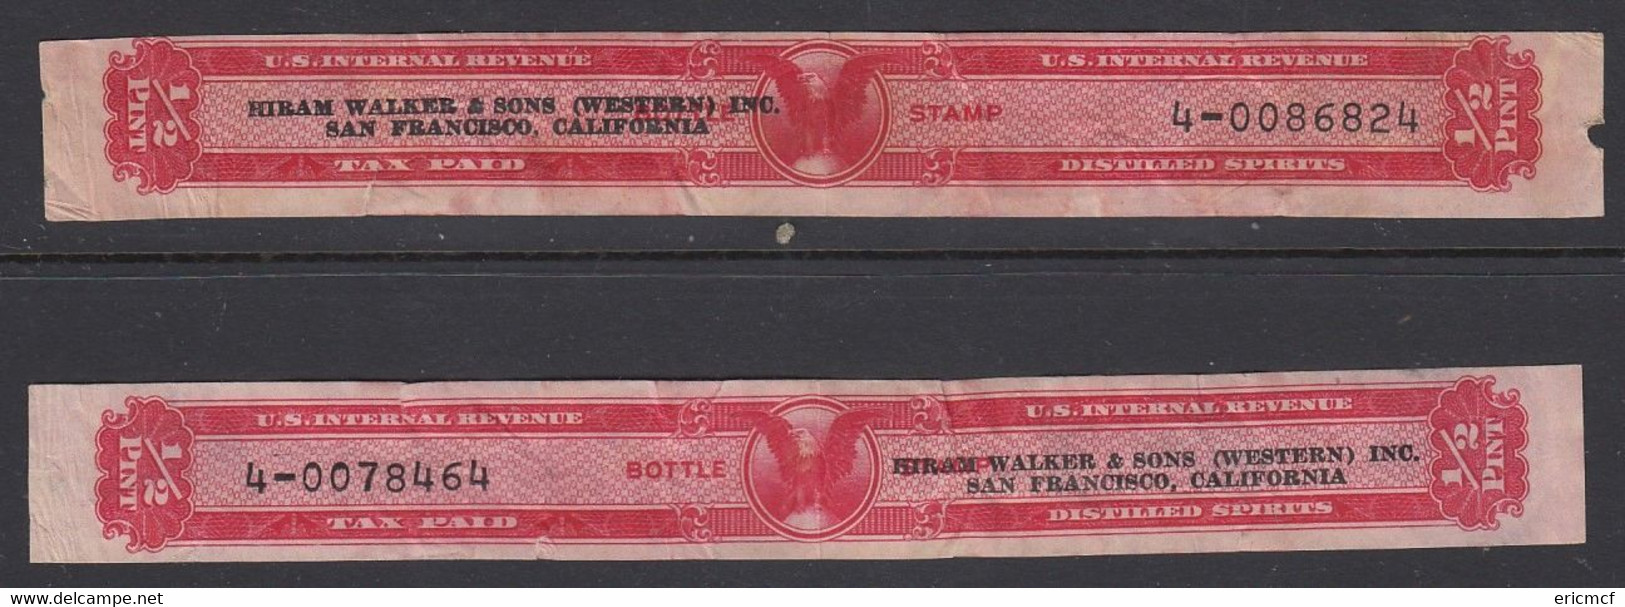 USA Distilled Spirits 1/2 Pint Revenue Stamp X2 Hiram Walker - Fiscali